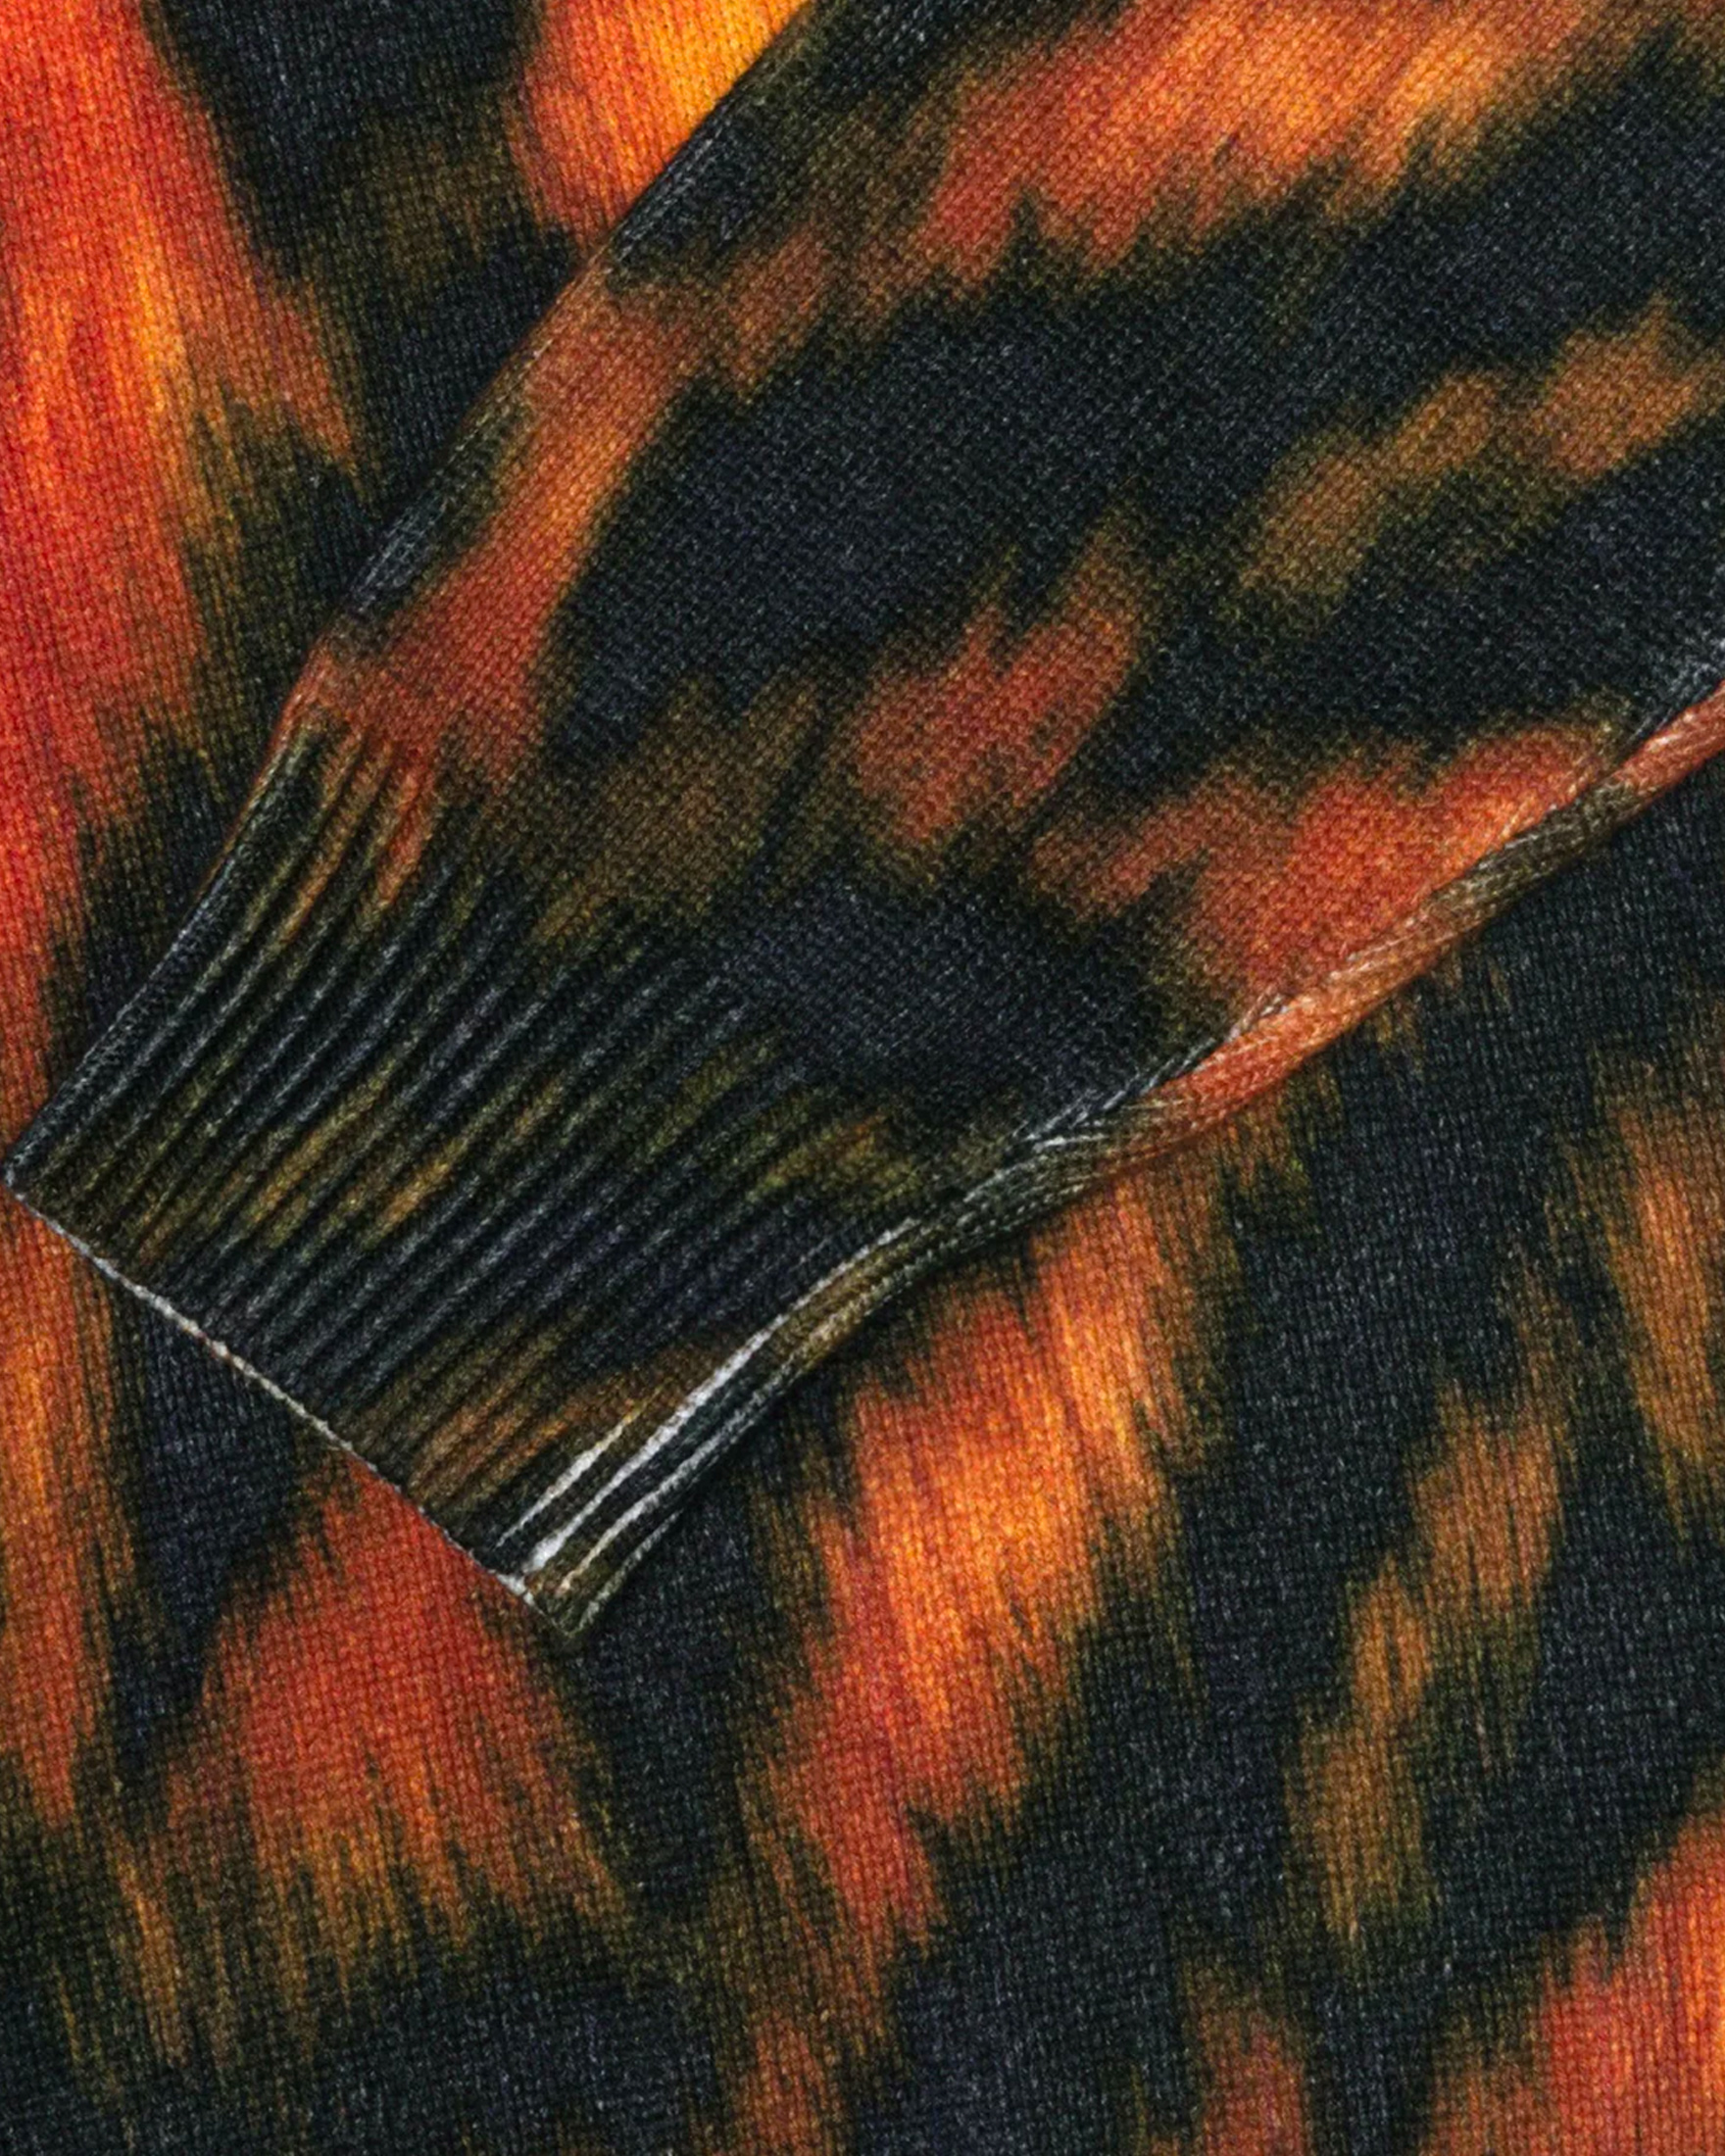 Printed Fur Sweater $119 Stüssy Tops Crewnecks Black